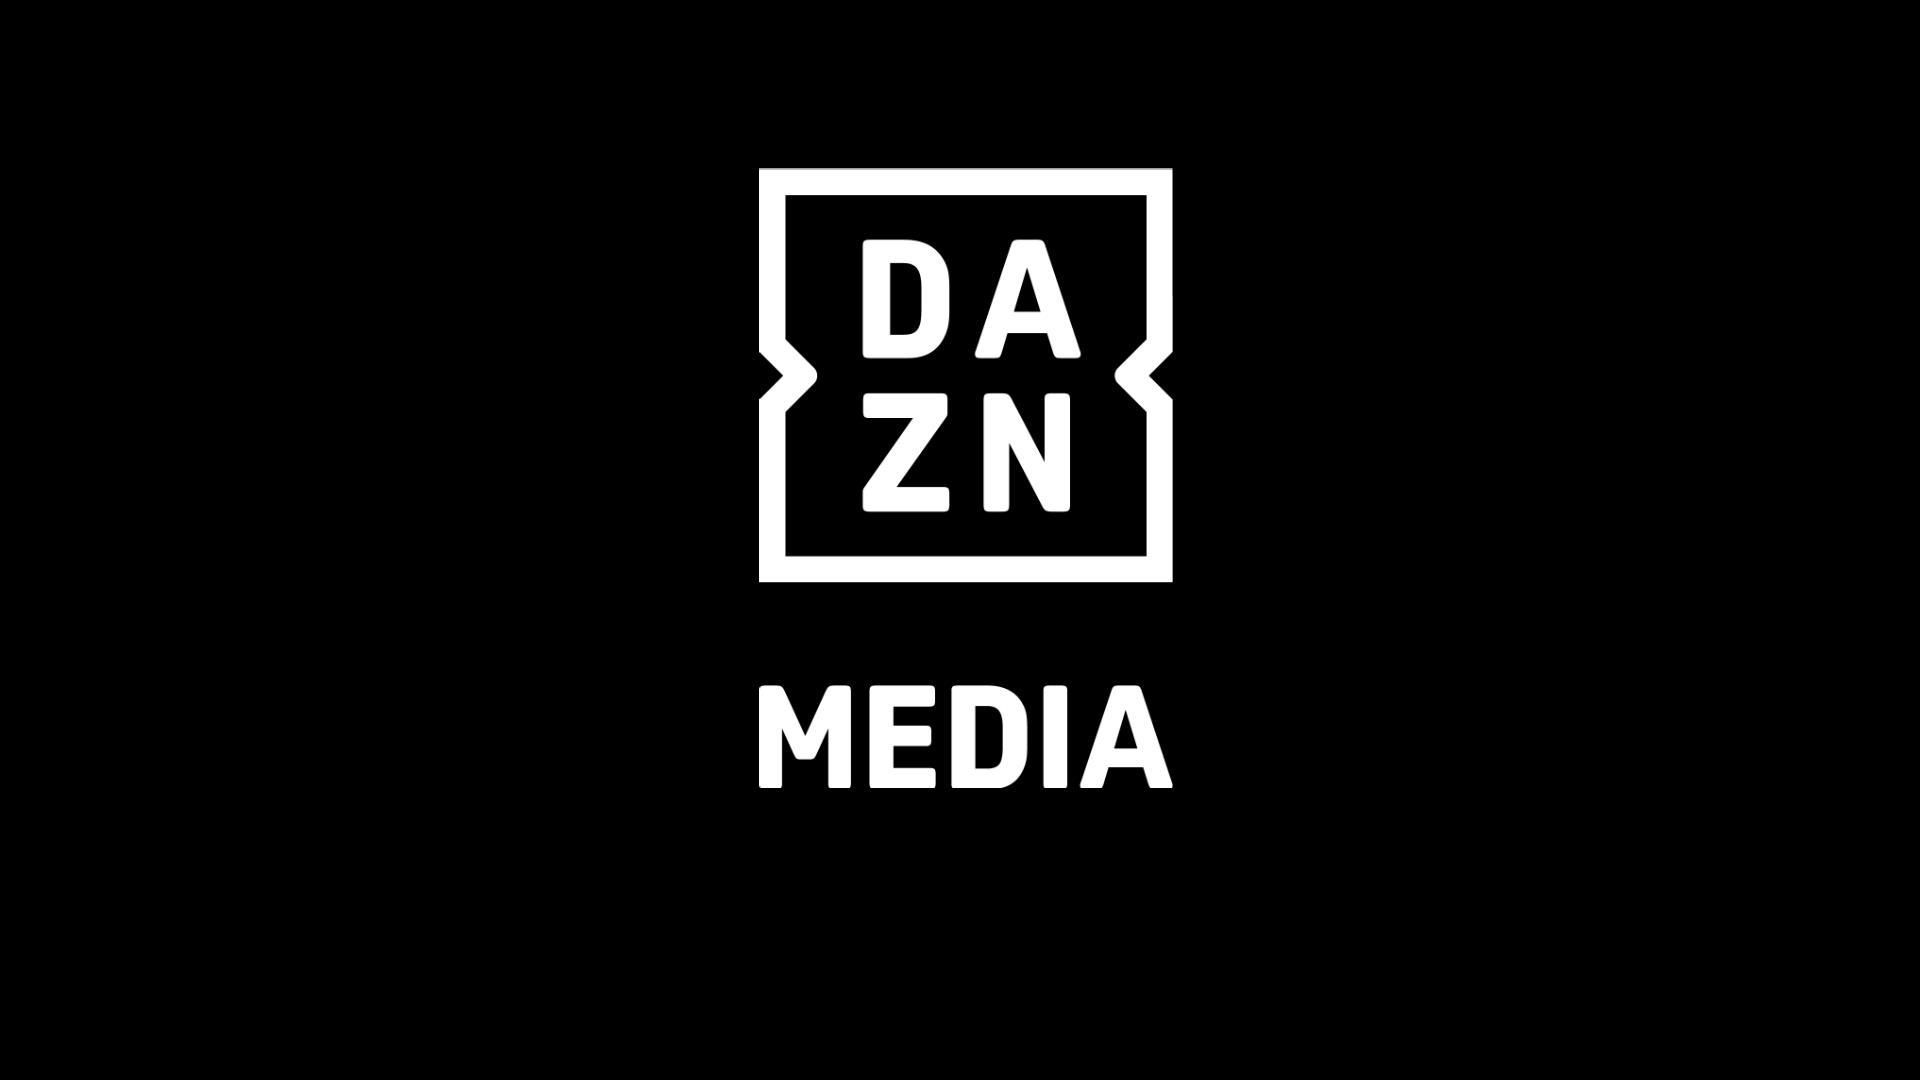 DAZN Media Announced As New Entity Responsible For Global Media Partnerships